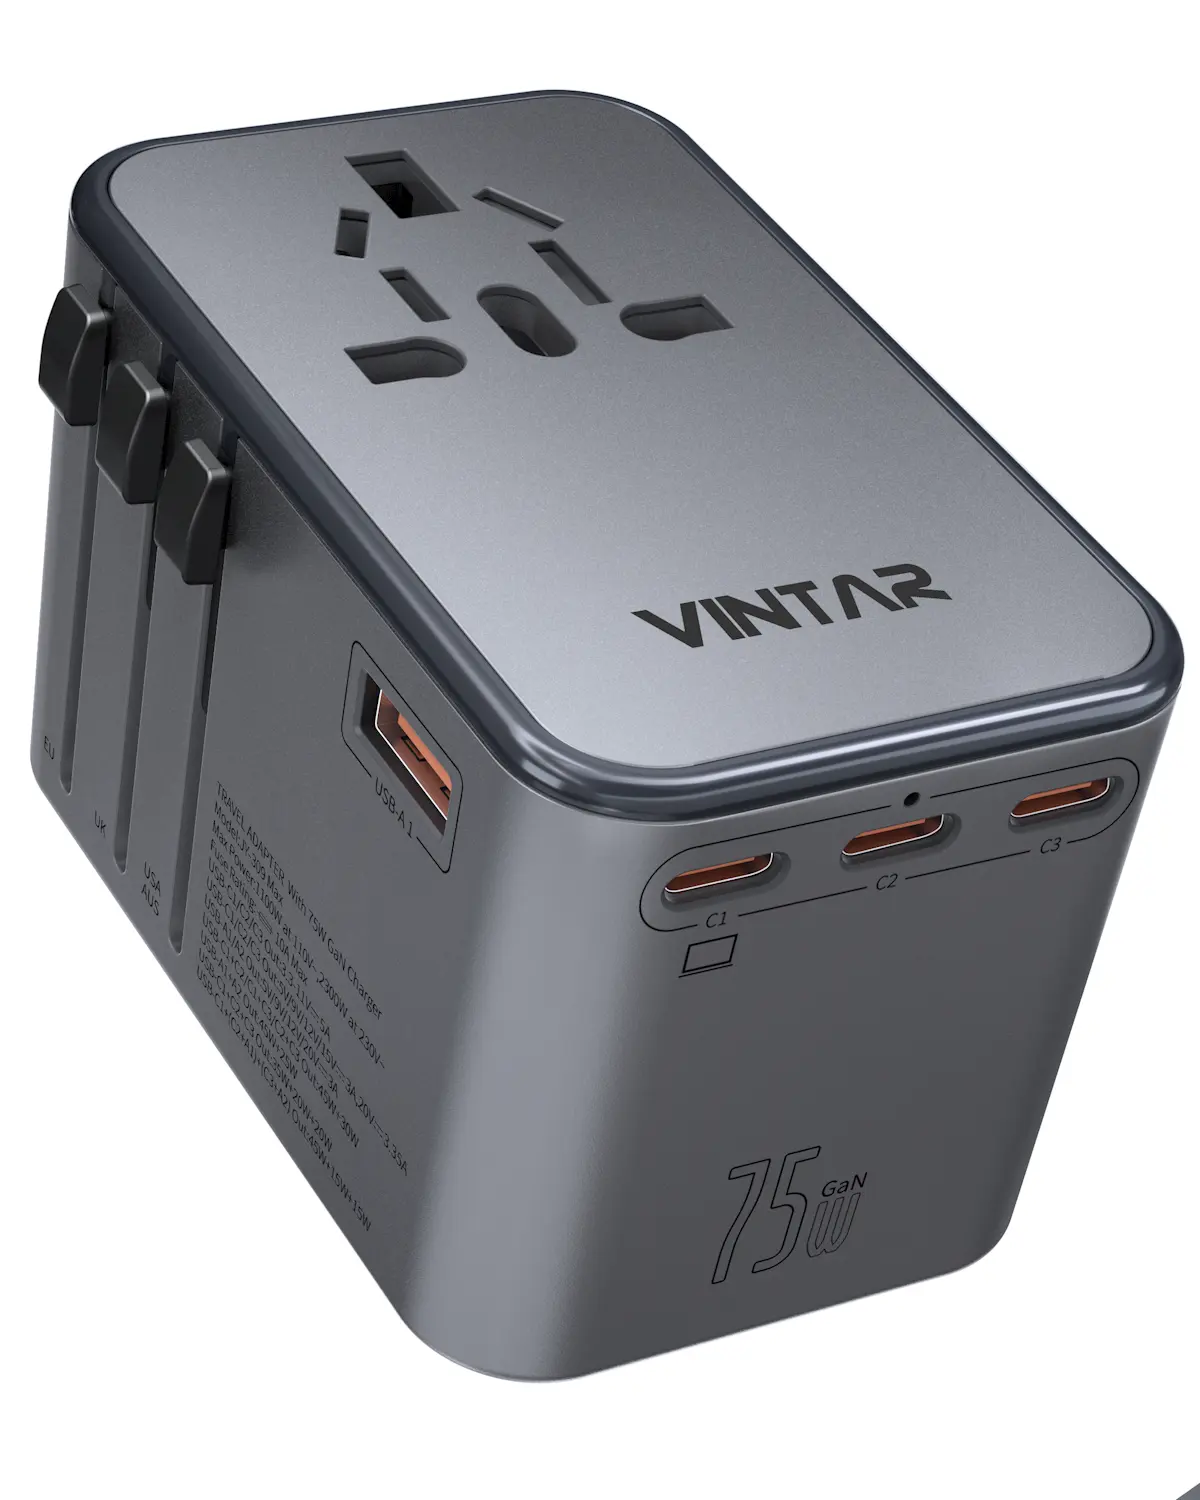 VINTAR GAN 75W USB الكل في واحد محول شاحن للسفر العالمي مآخذ شاحن الطاقة مع الاتحاد الأوروبي الولايات المتحدة المملكة المتحدة الاتحاد الافريقي المكونات